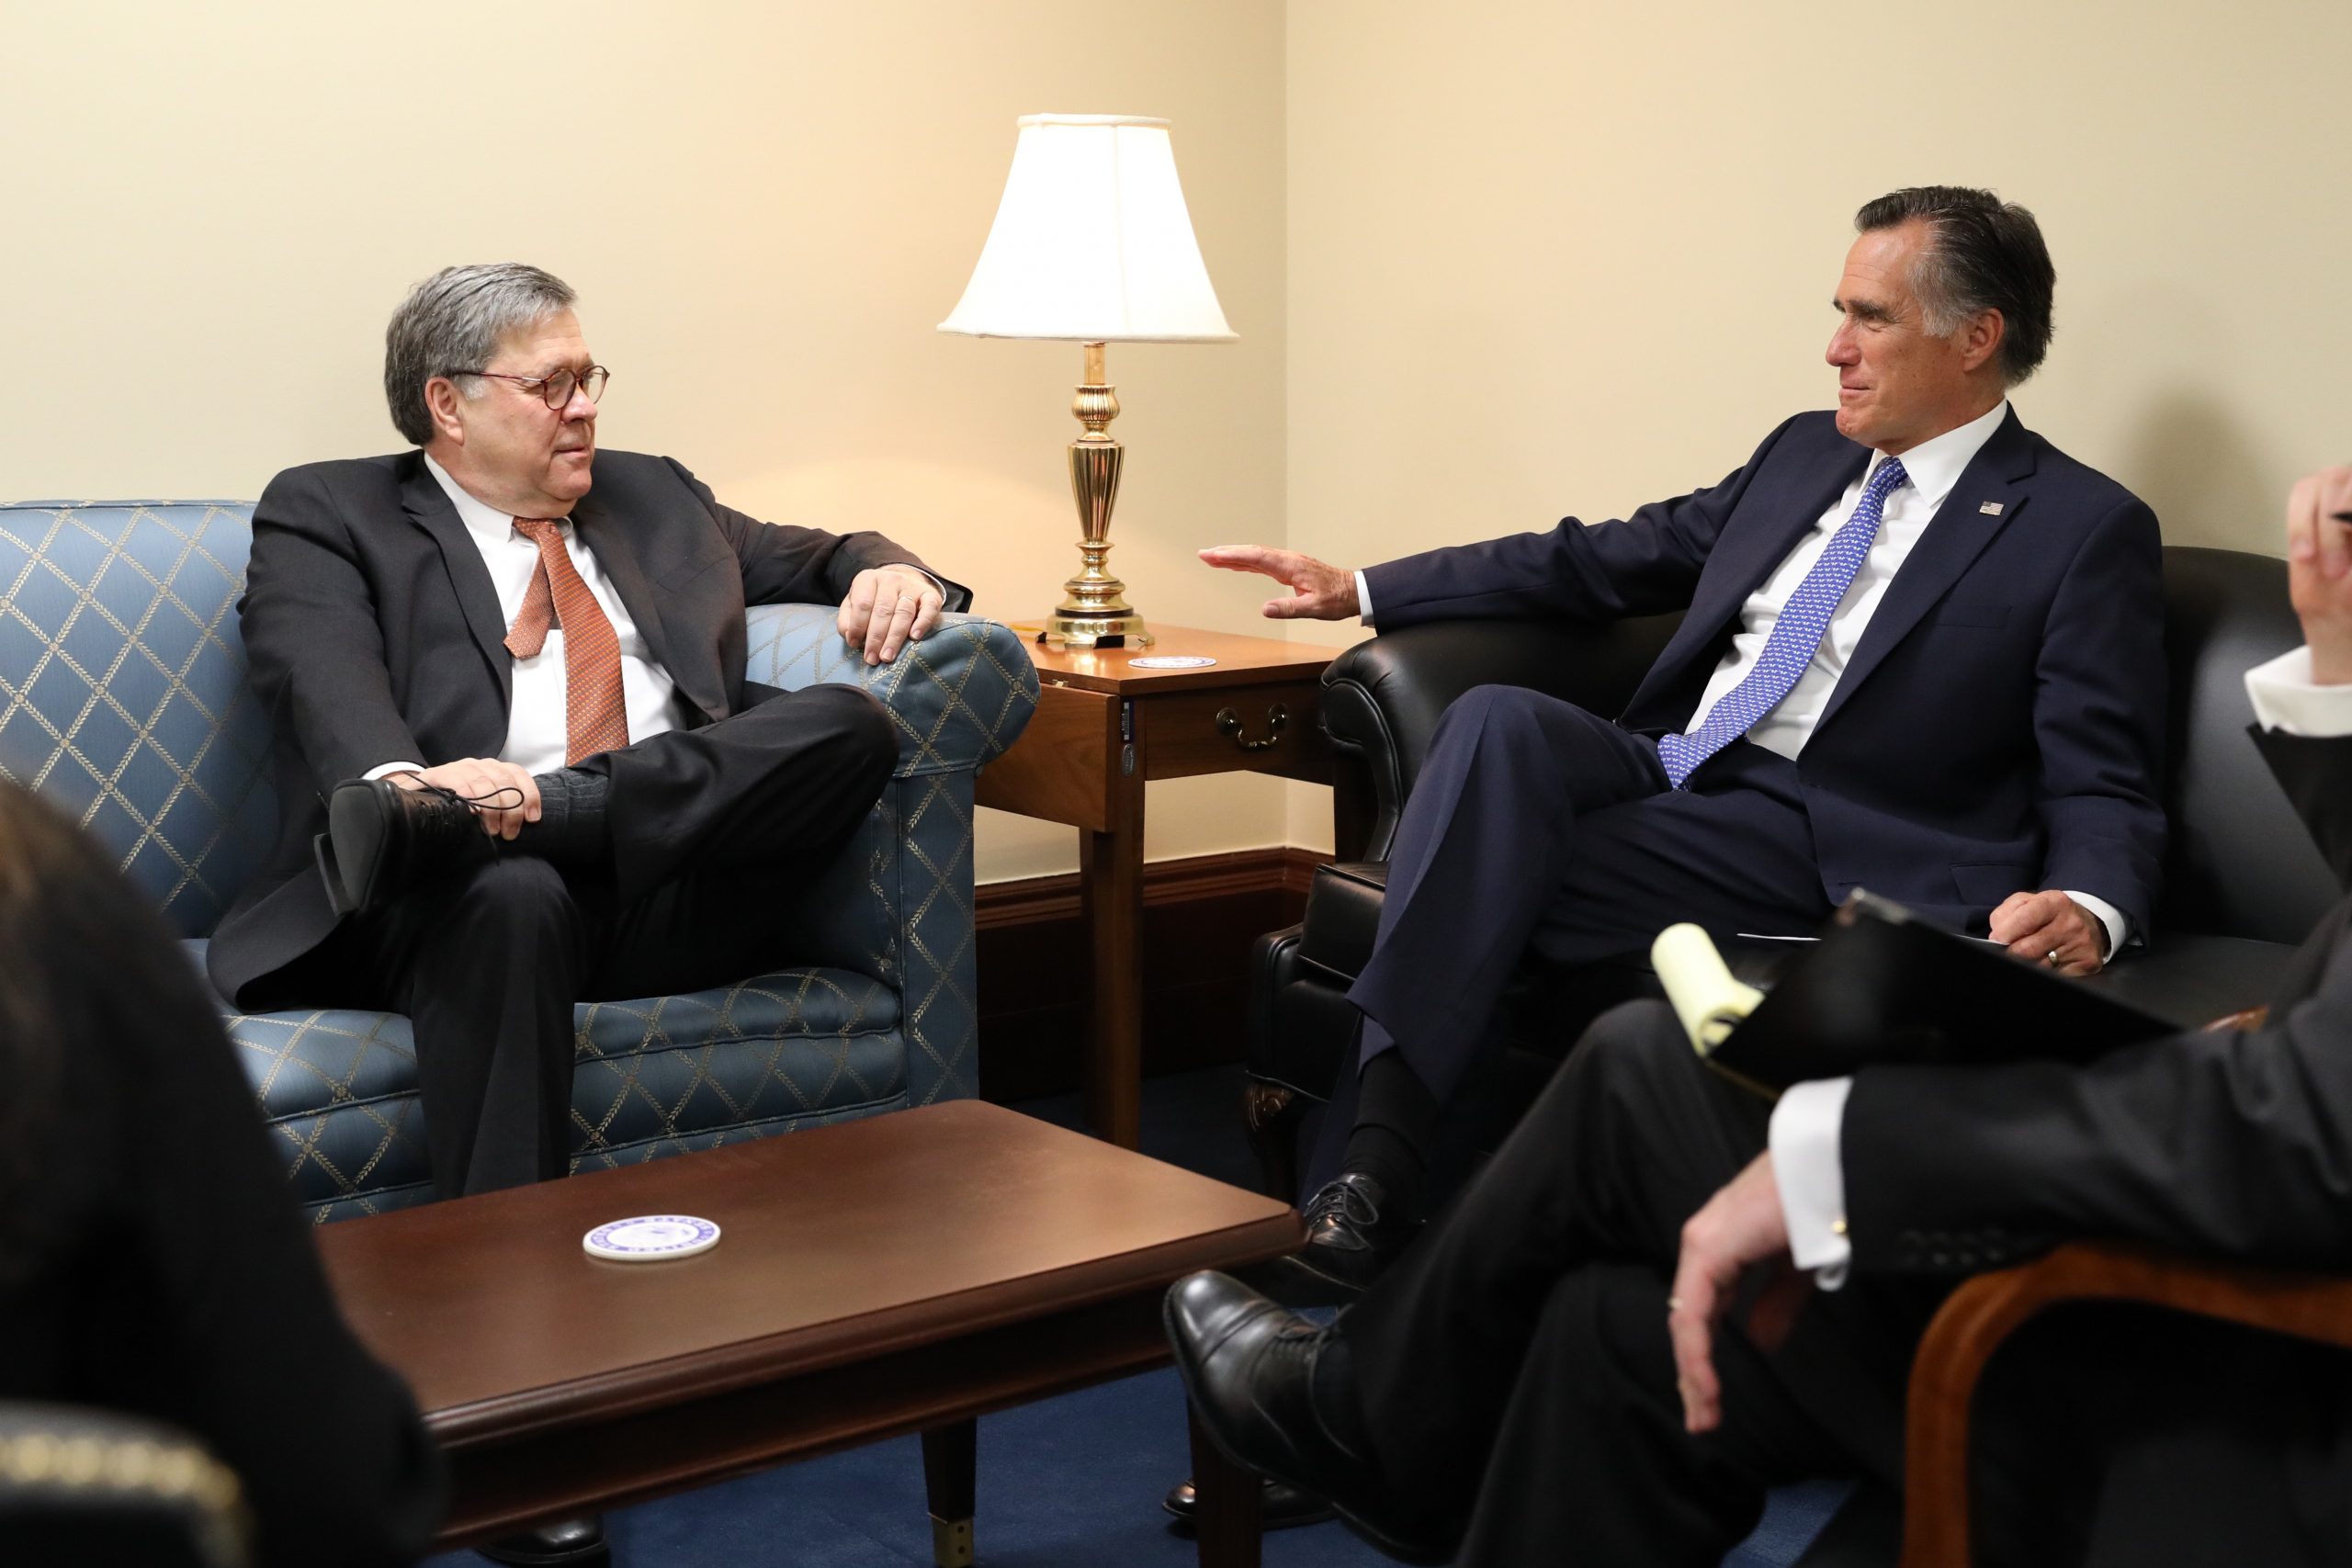 Senator Romney meets with Attorney General nominee William Barr